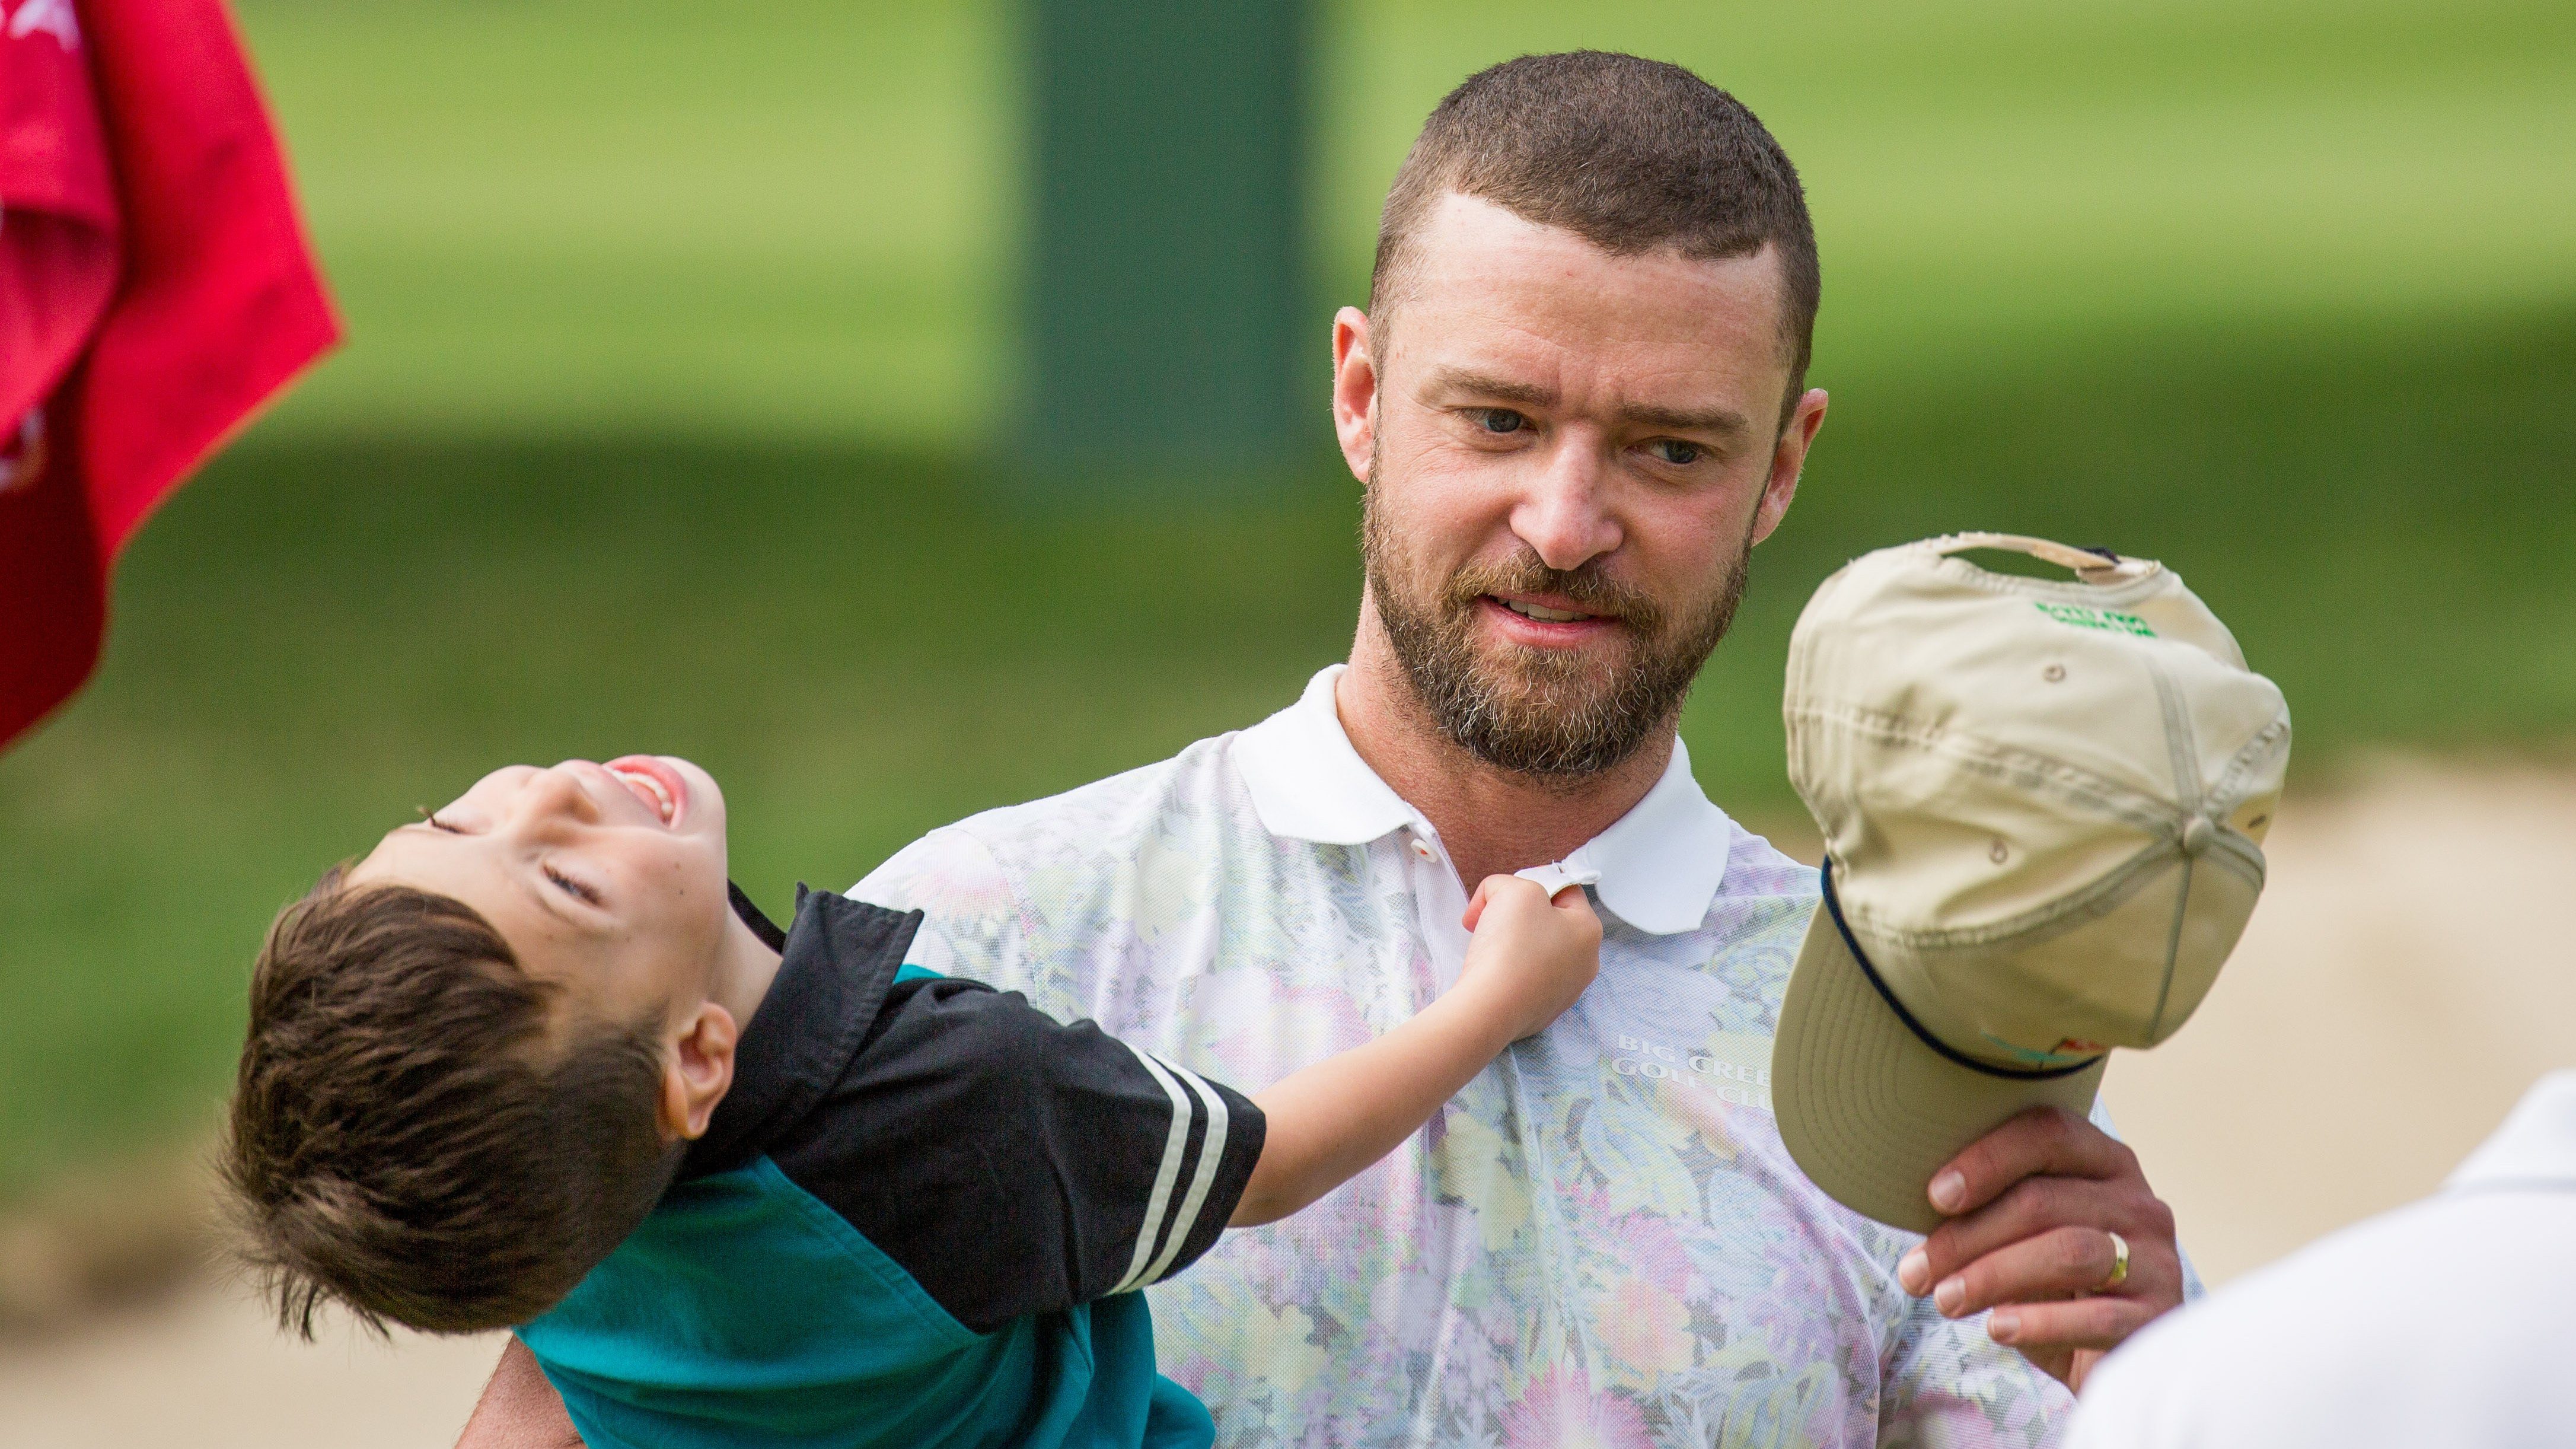 Does Justin Timberlake Have Kids?